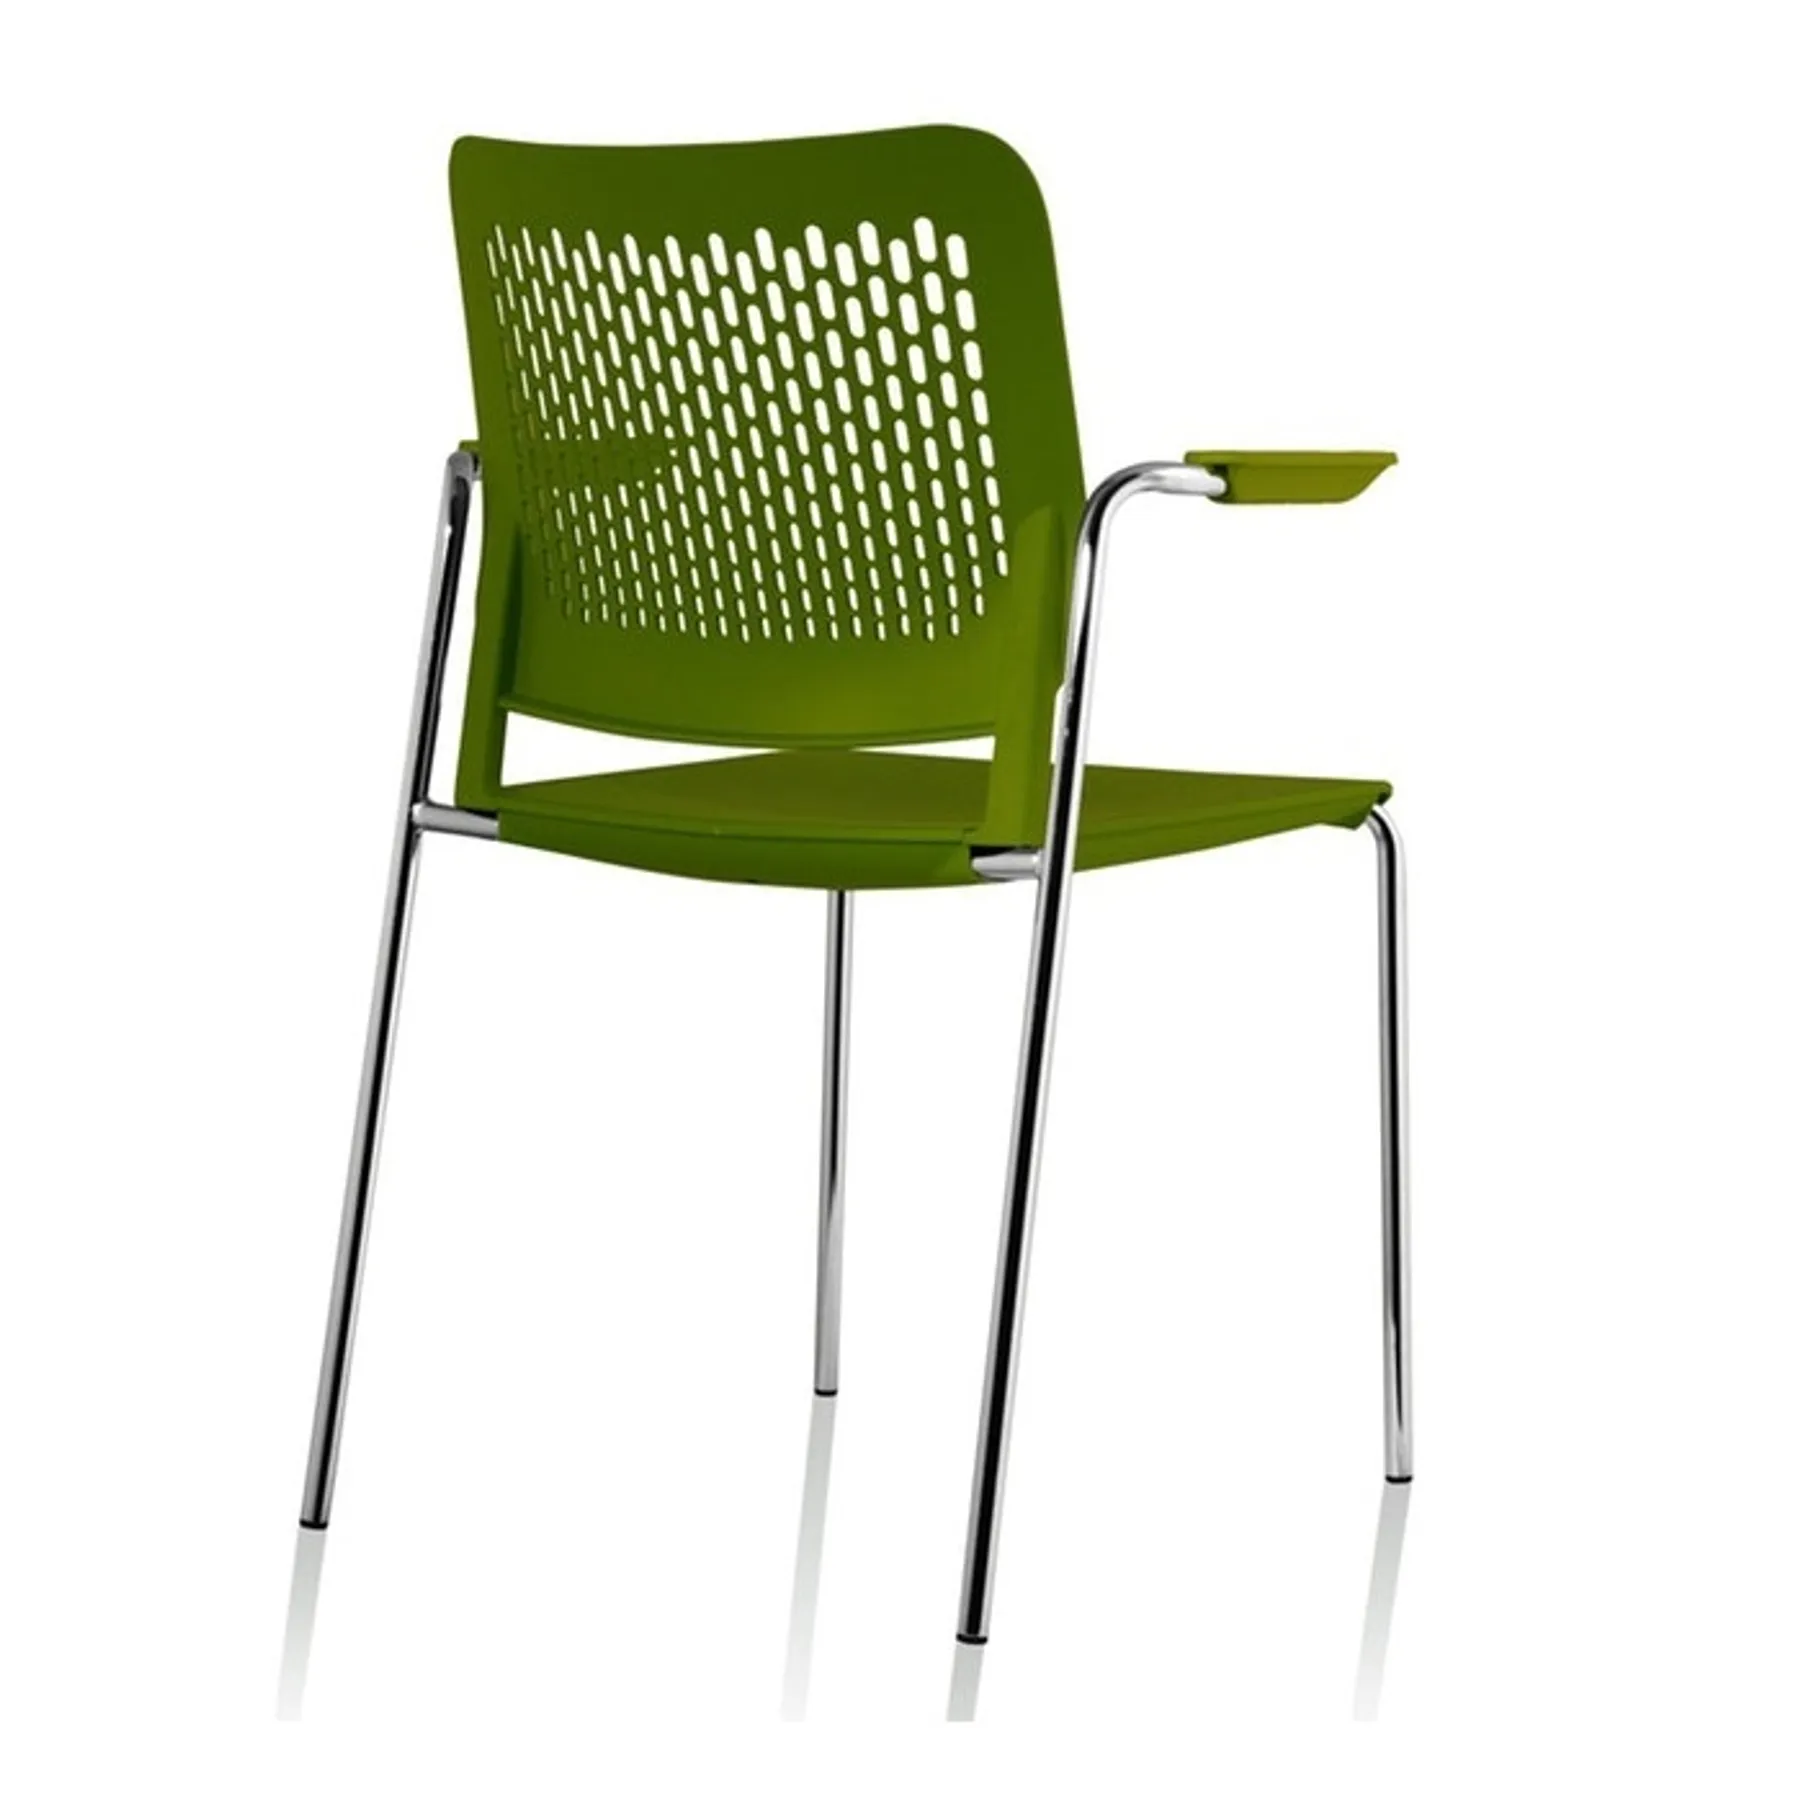 Lof direct Sven Christiansen XRB1 Plastic Cafe Chair Green Arms jpg